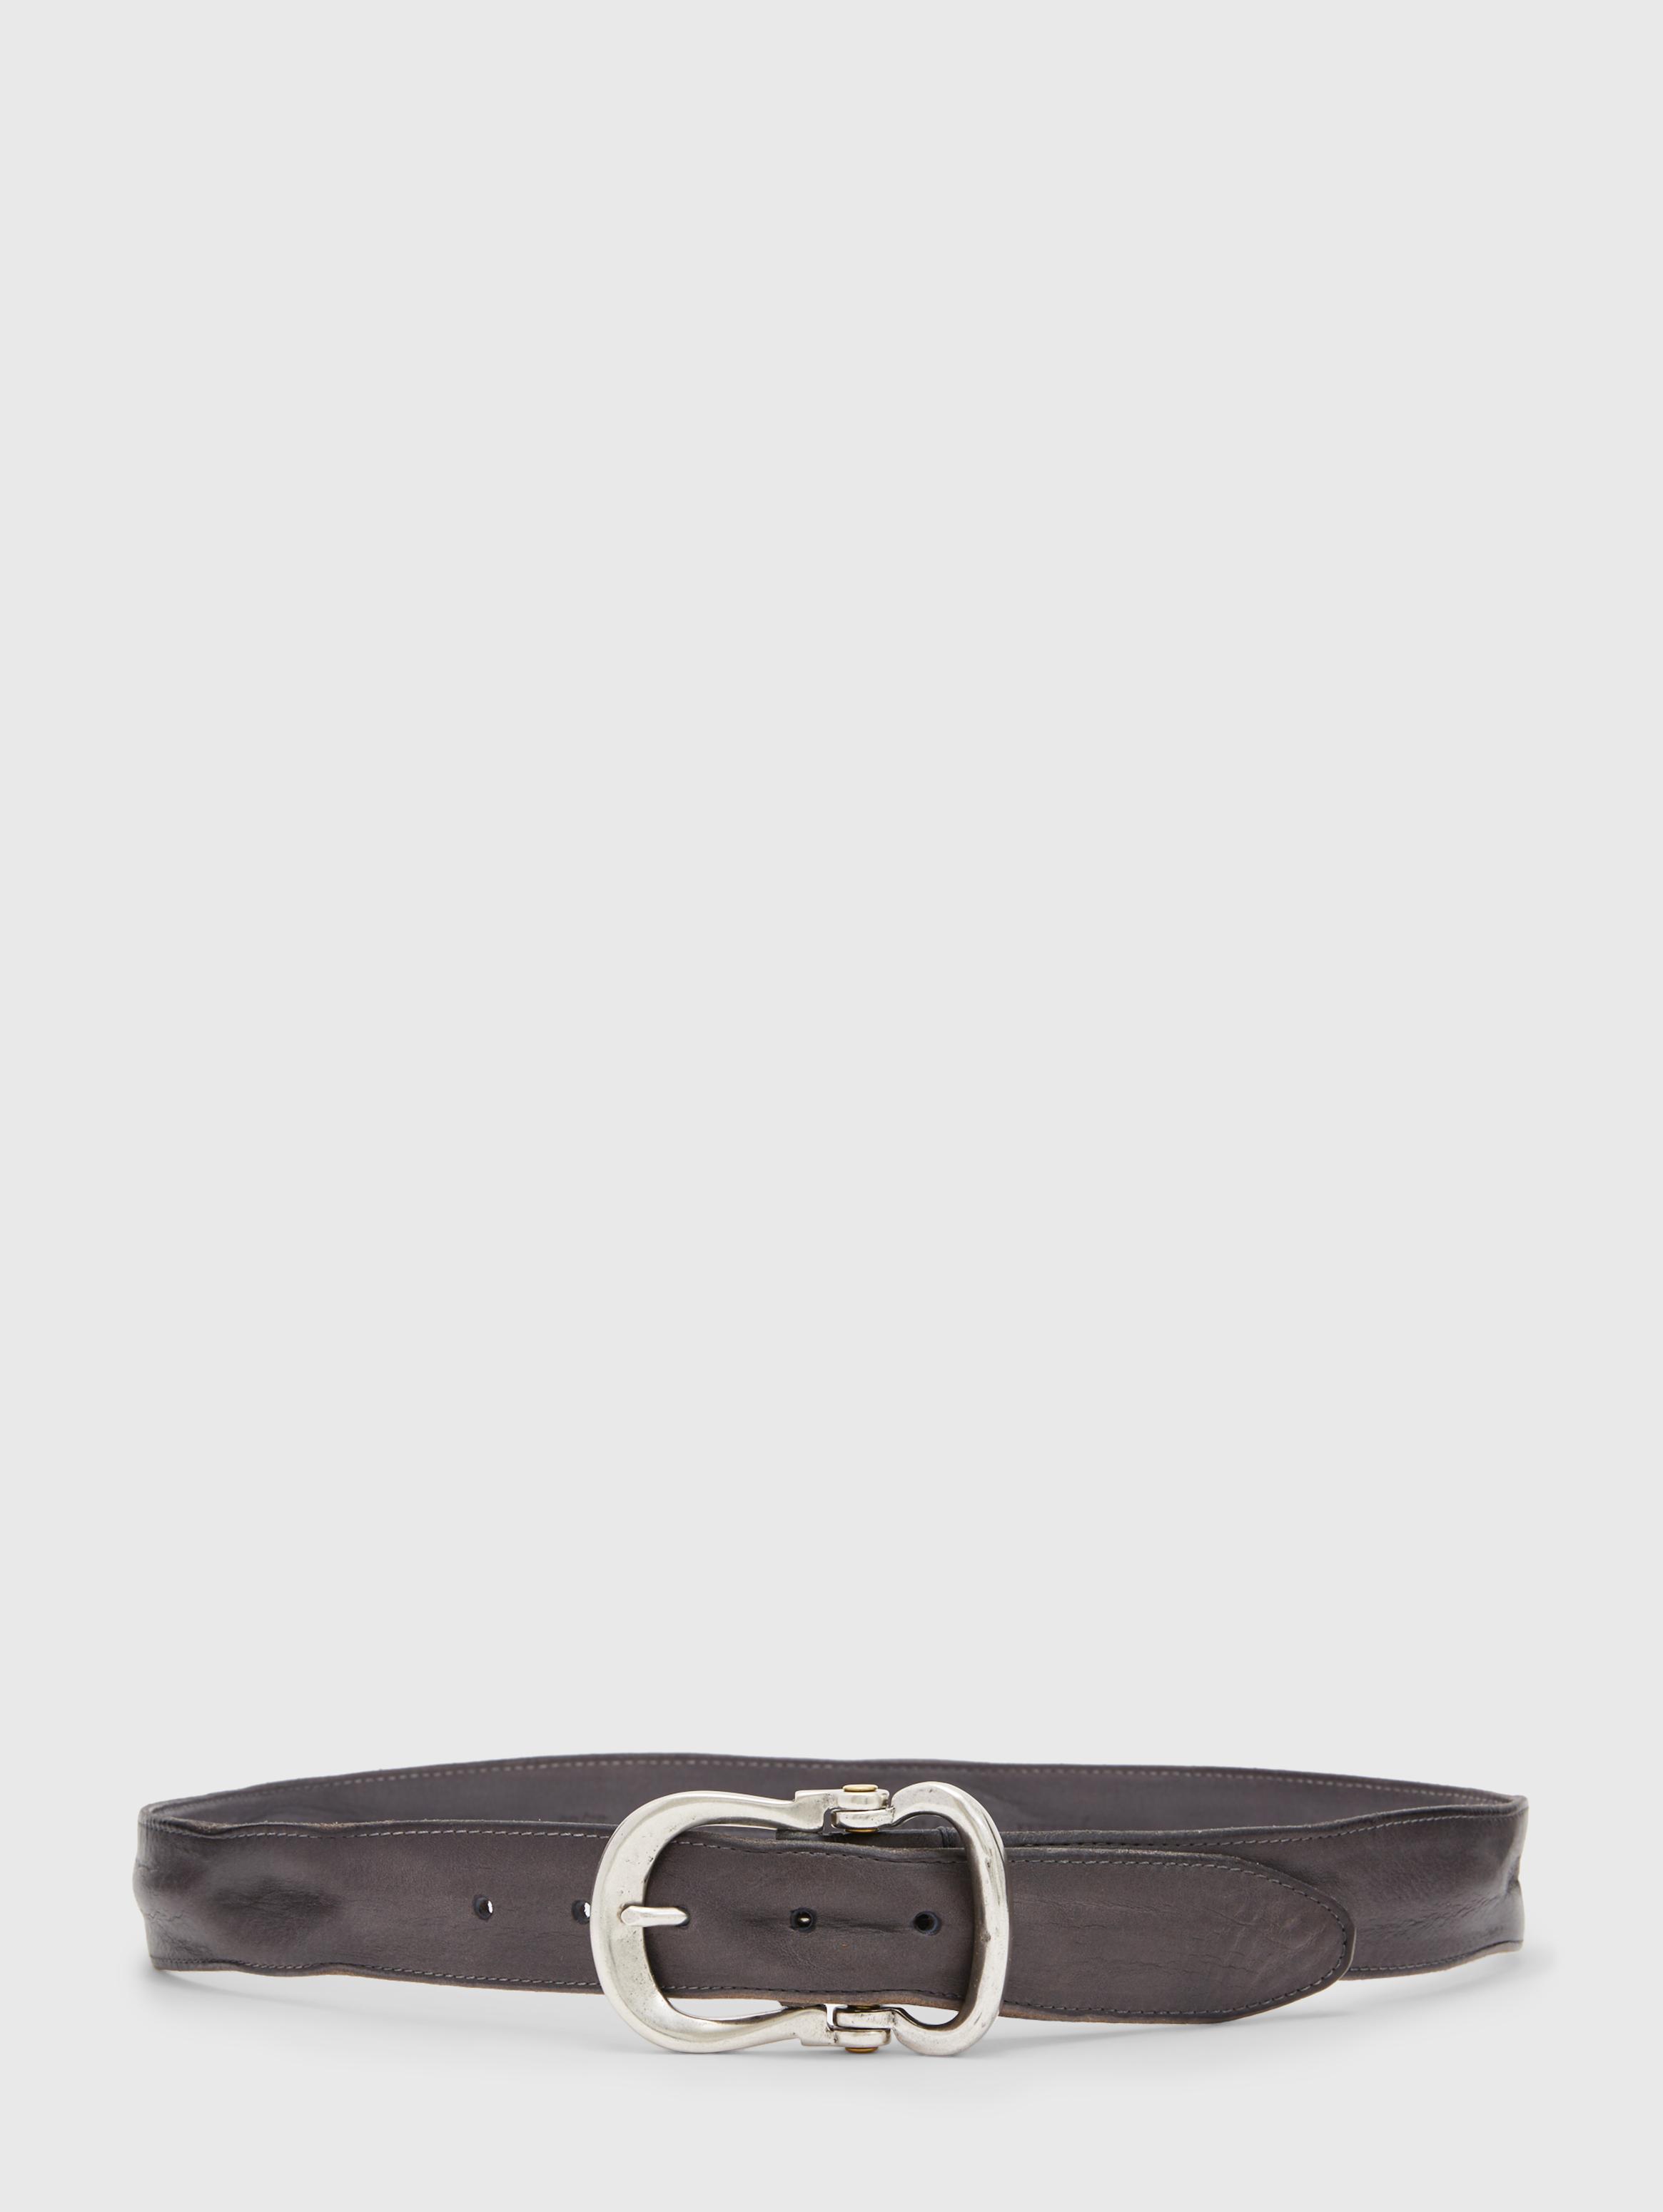 Black Pebbled Leather Belt, Signature Buckle (Antique Brass